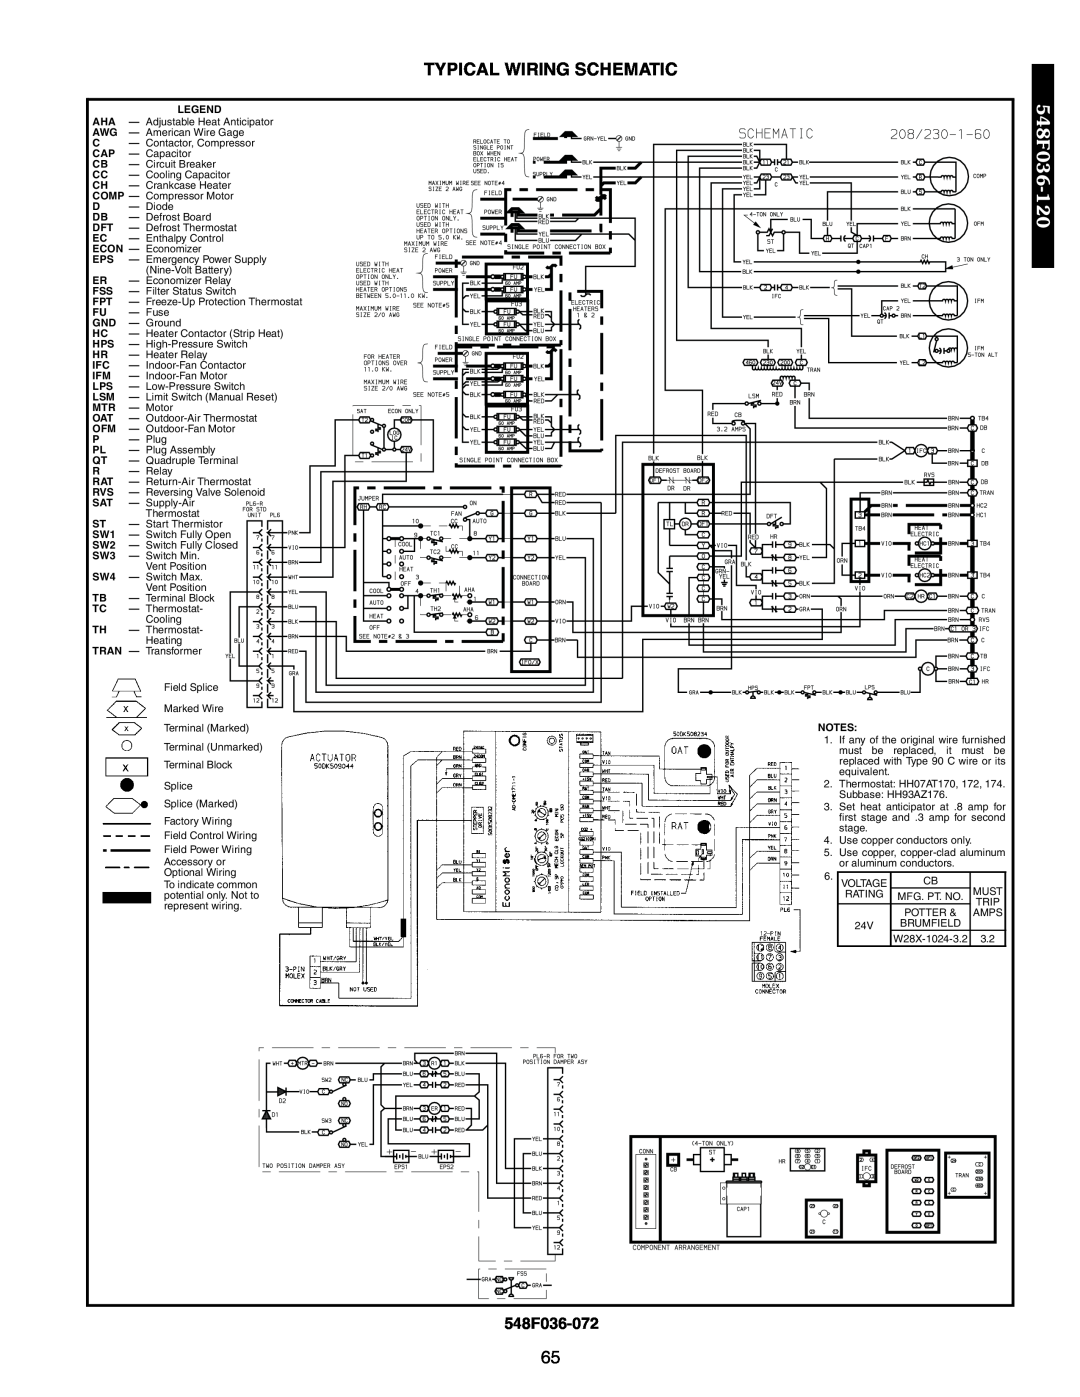 Bryant 549B, 542J manual Typical Wiring Schematic, 548F036-120, 548F036-072 